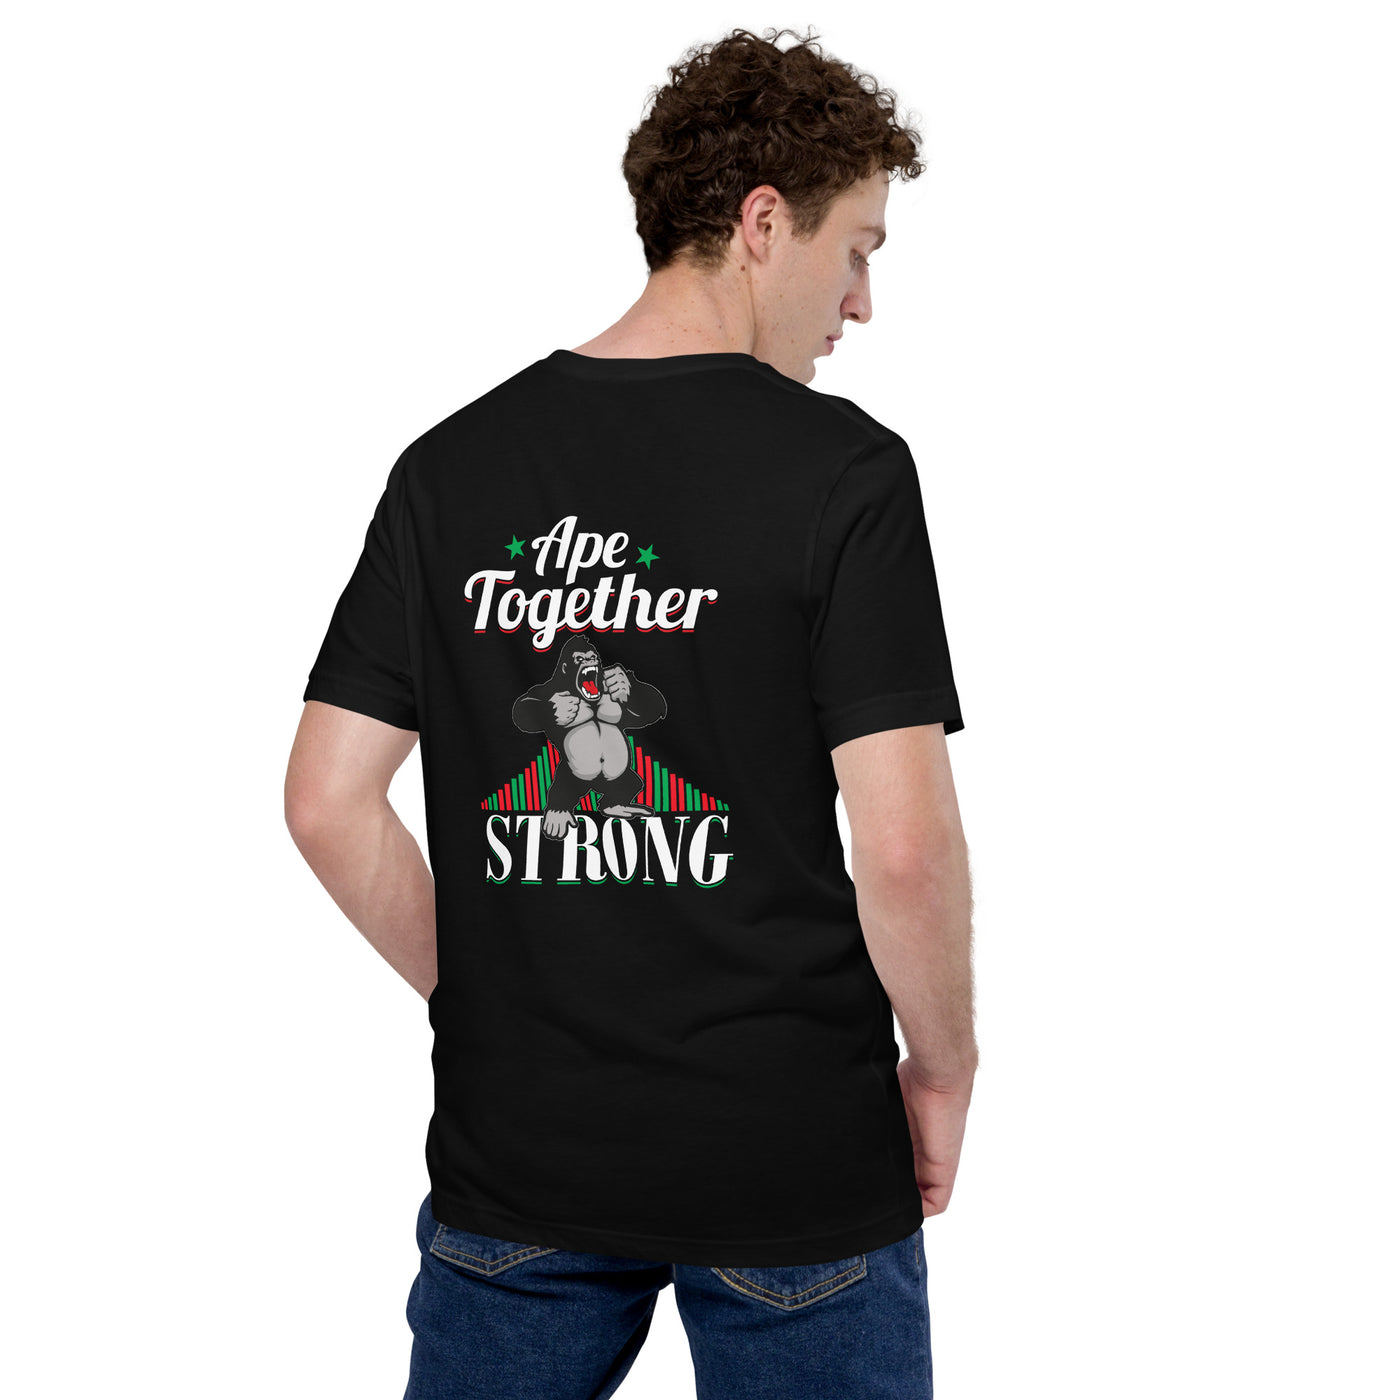 Ape together strong - Unisex t-shirt ( Back Print )